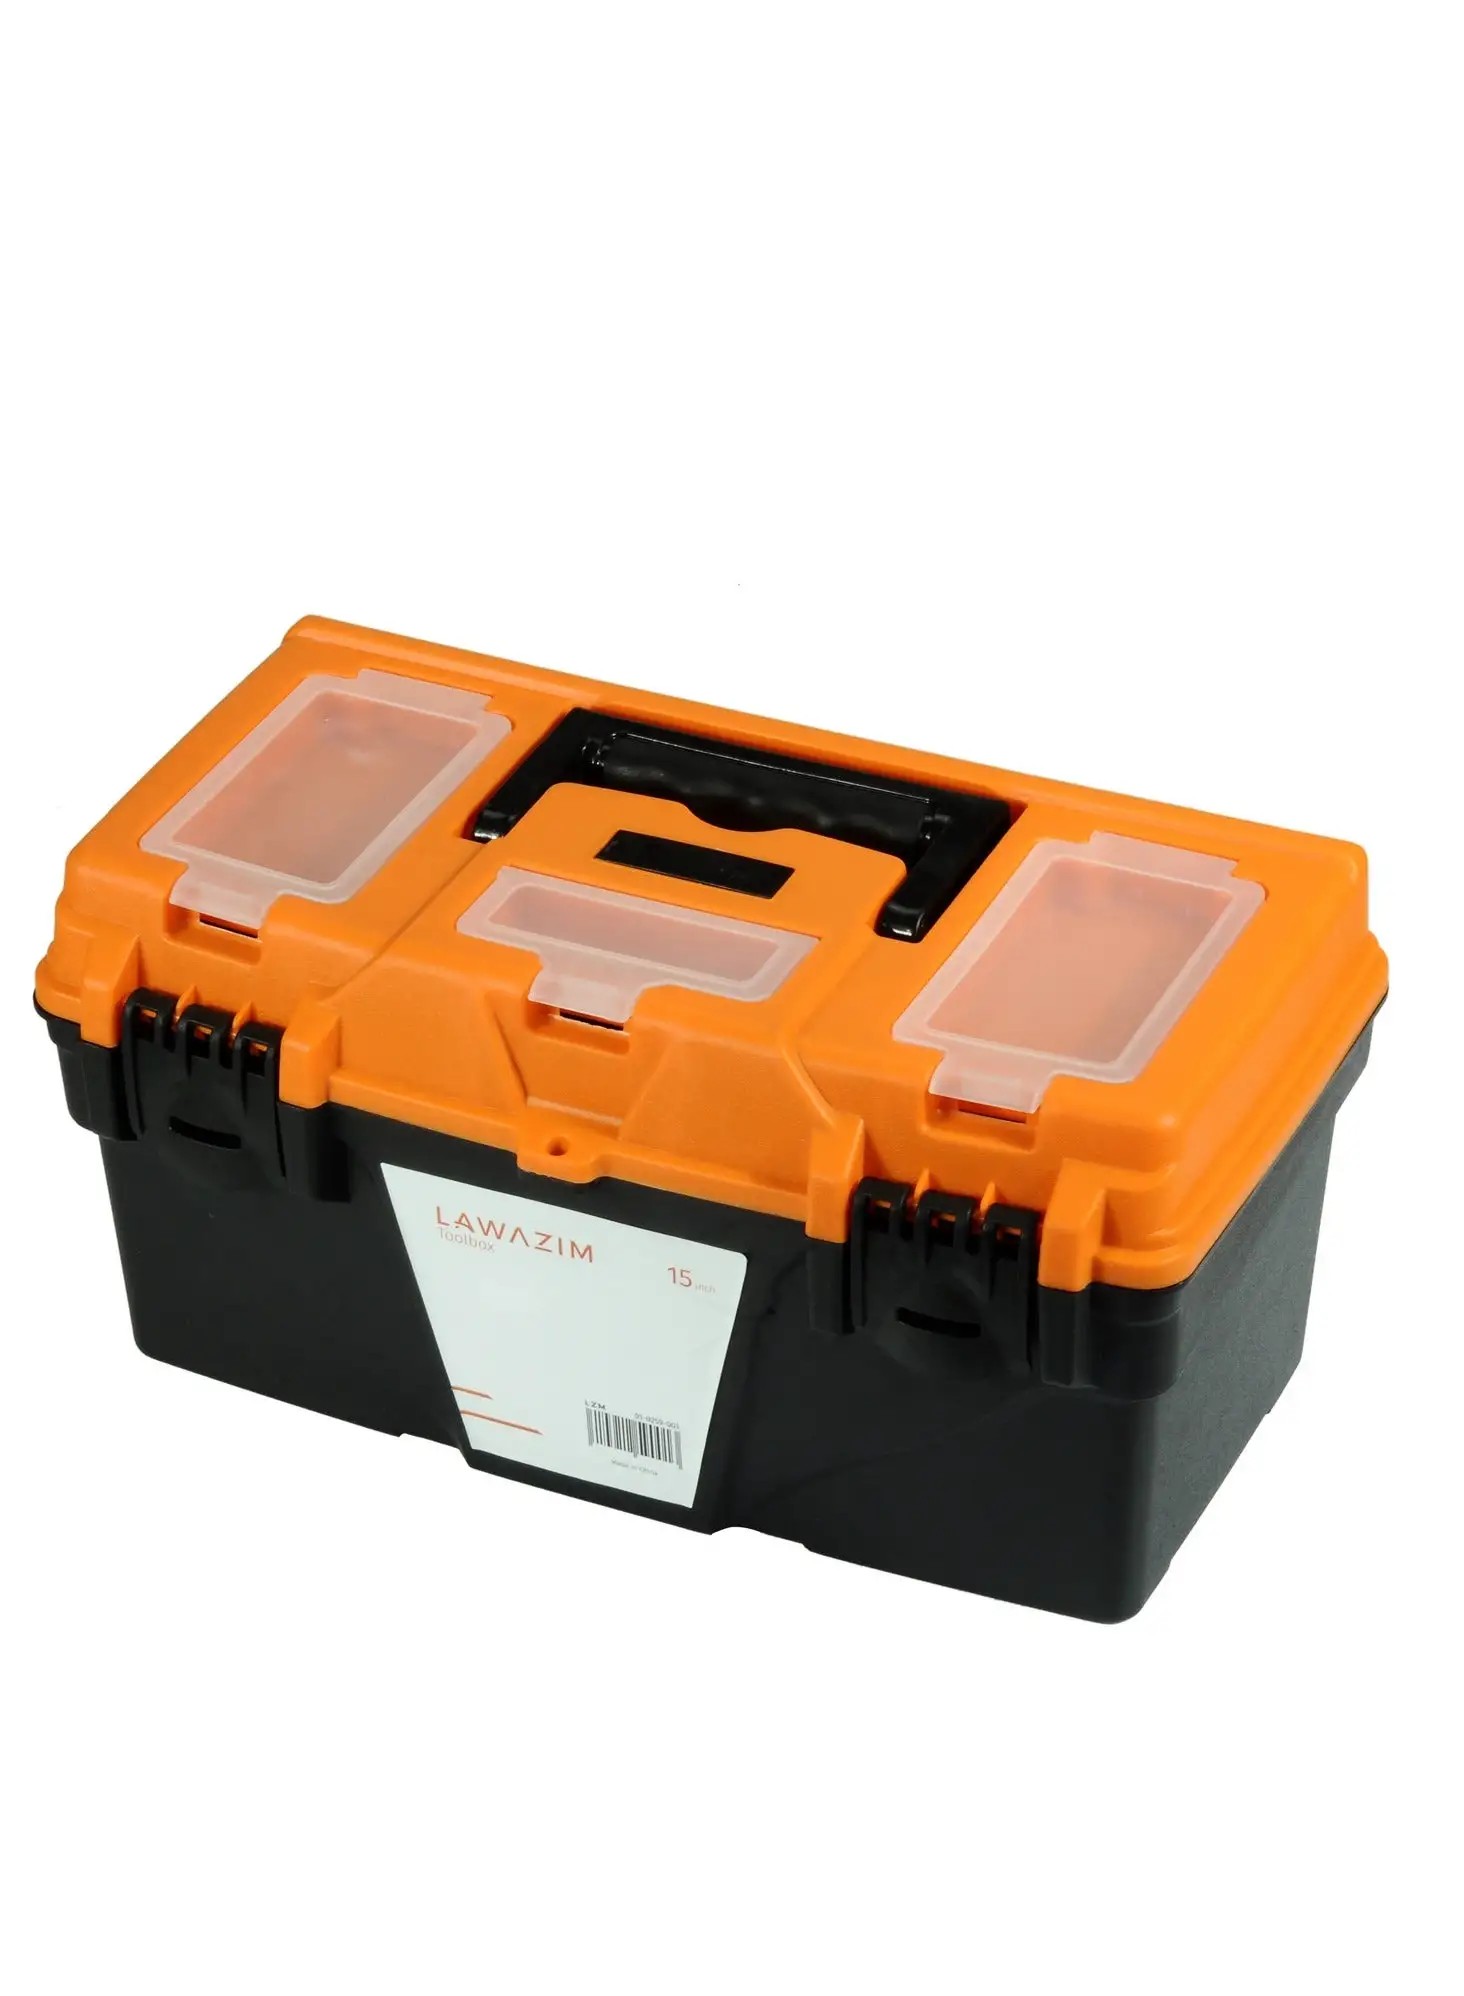 LAWAZIM Plastic Tool Box  18 Inch | Plastic Box with Handle | Tool Organizer Storage Box | Removable Inner Tray